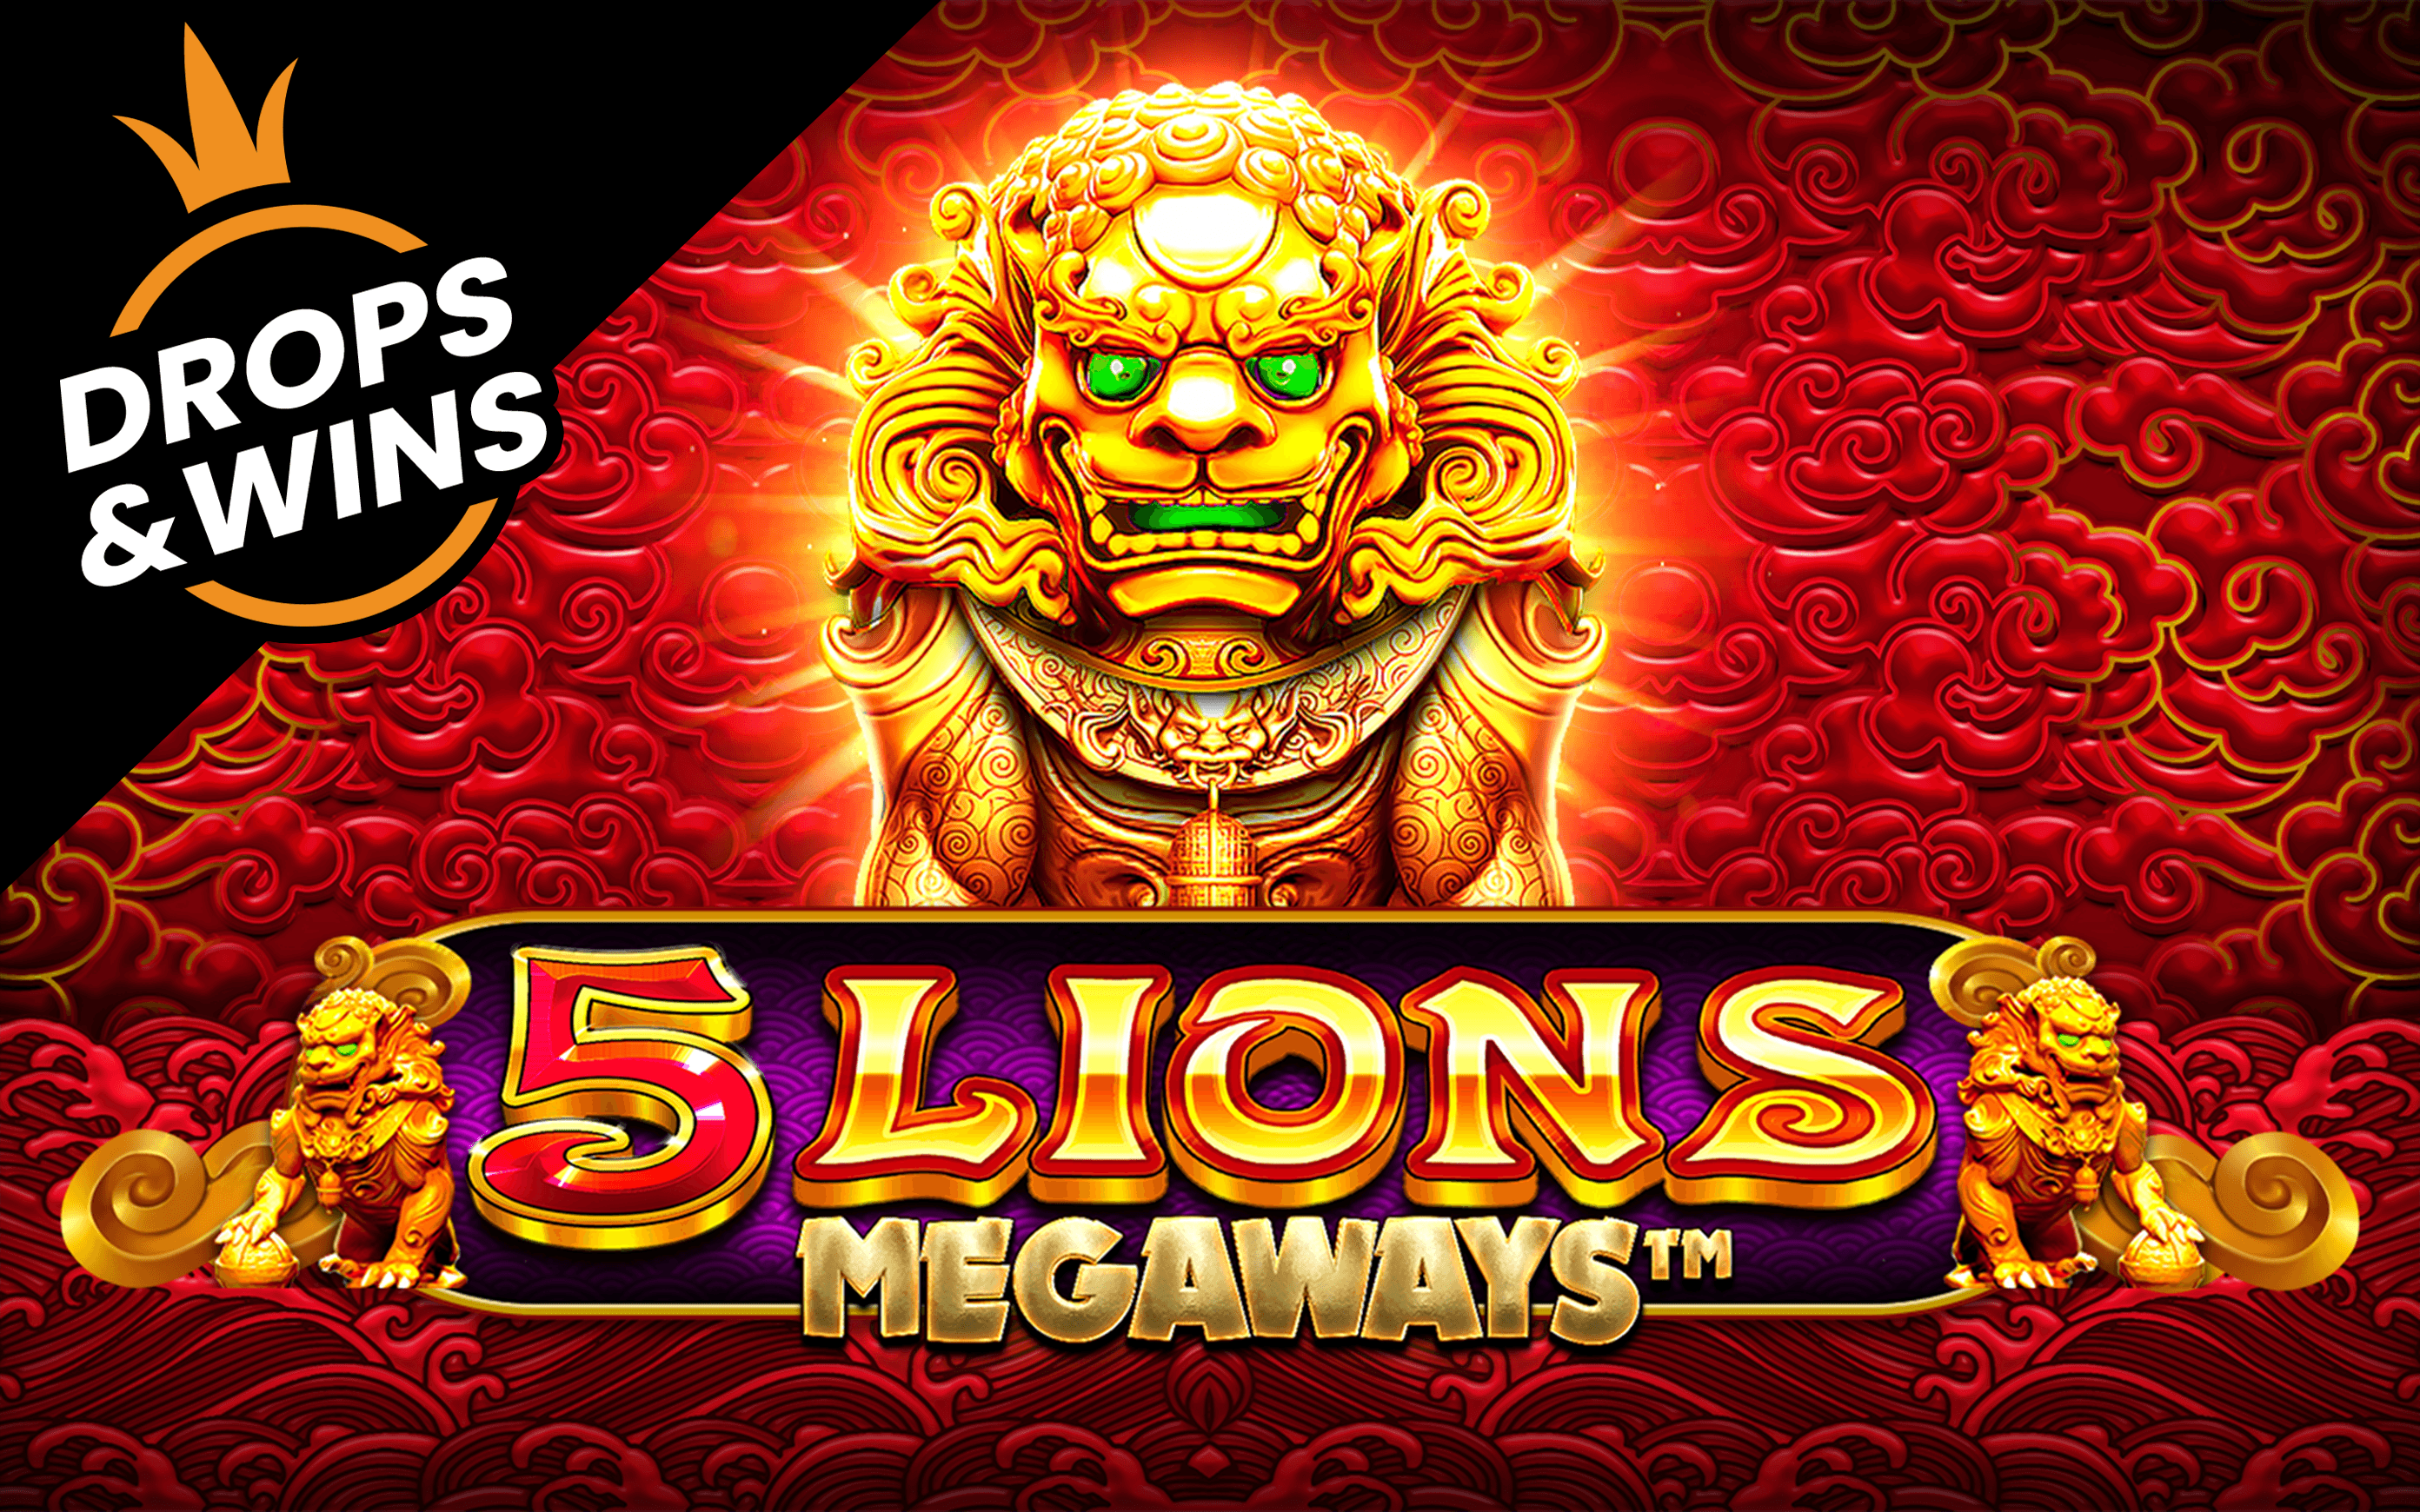 Play 5 Lions Megaways™ on Starcasino.be online casino